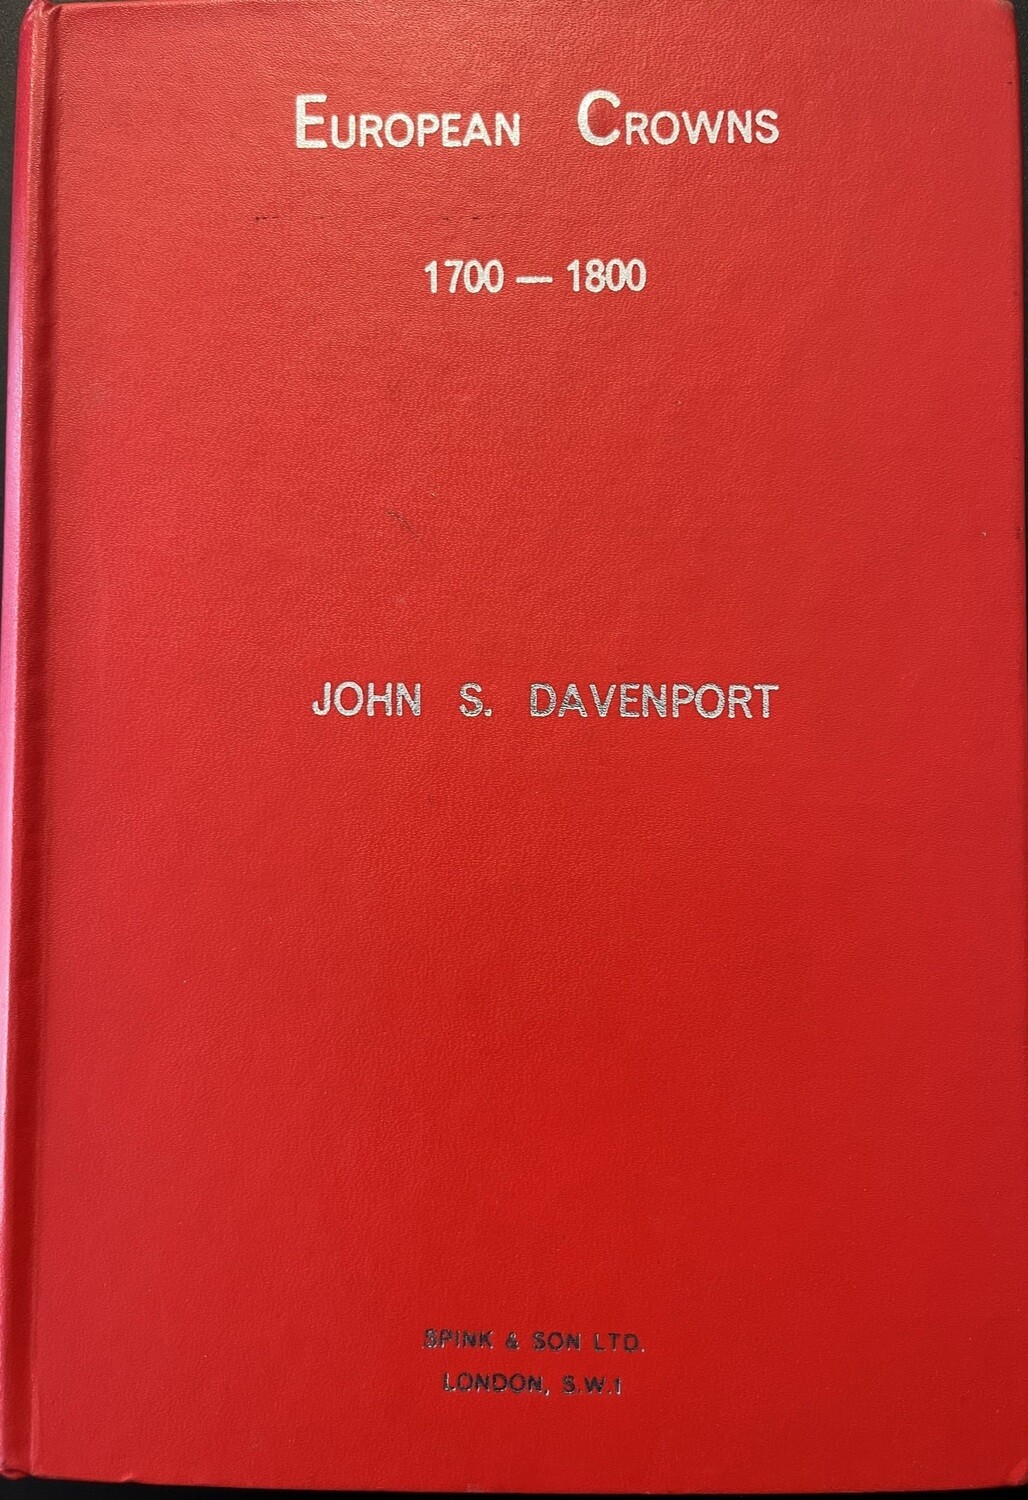 Davenport, John S. European Crowns 1700-1800